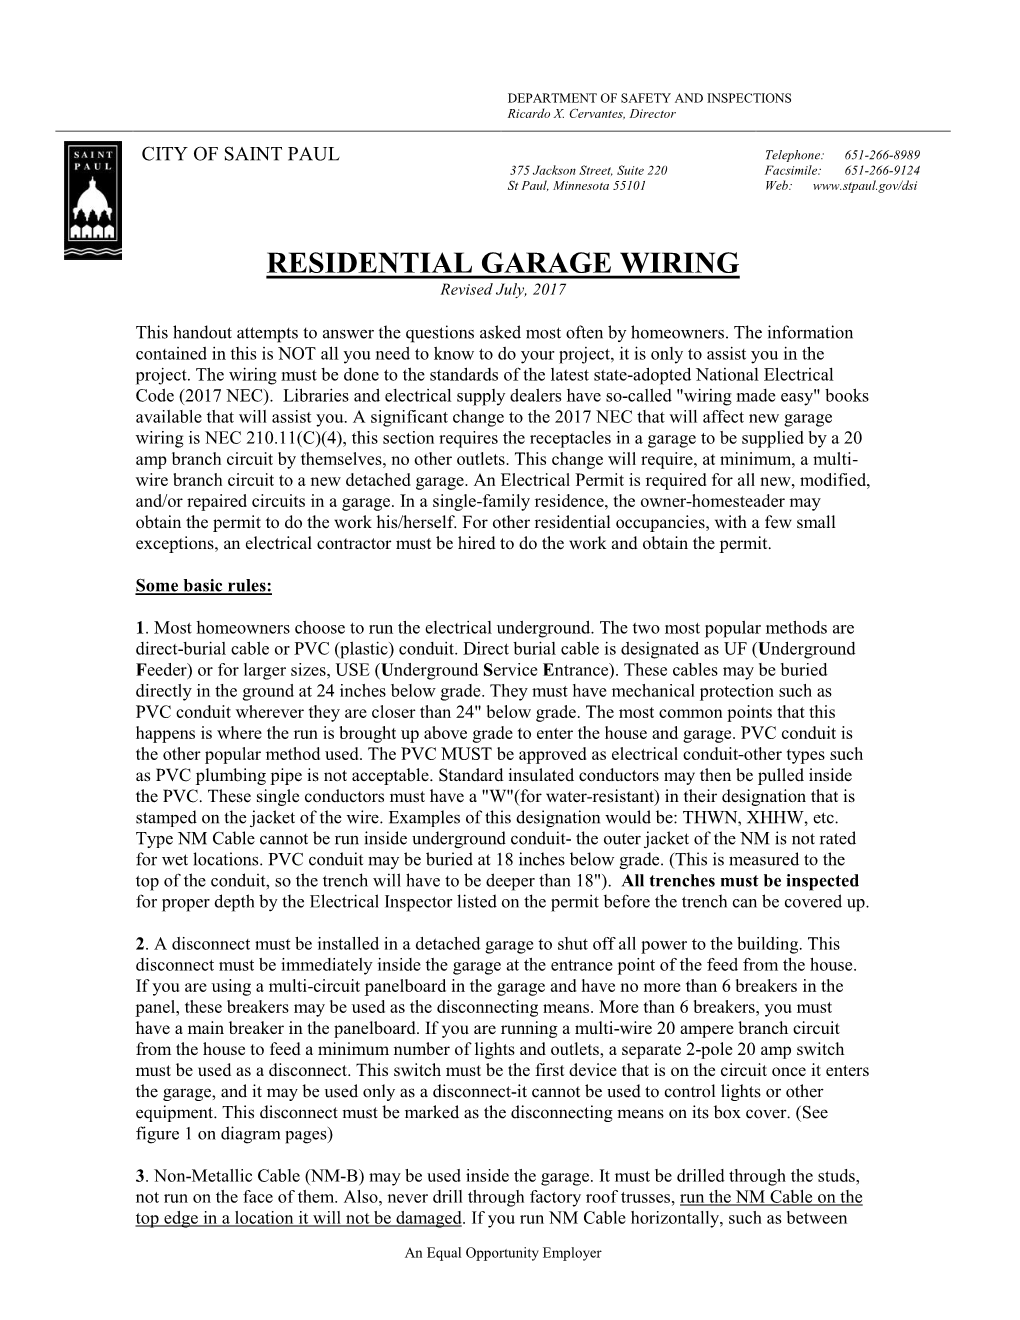 RESIDENTIAL GARAGE WIRING Revised July, 2017